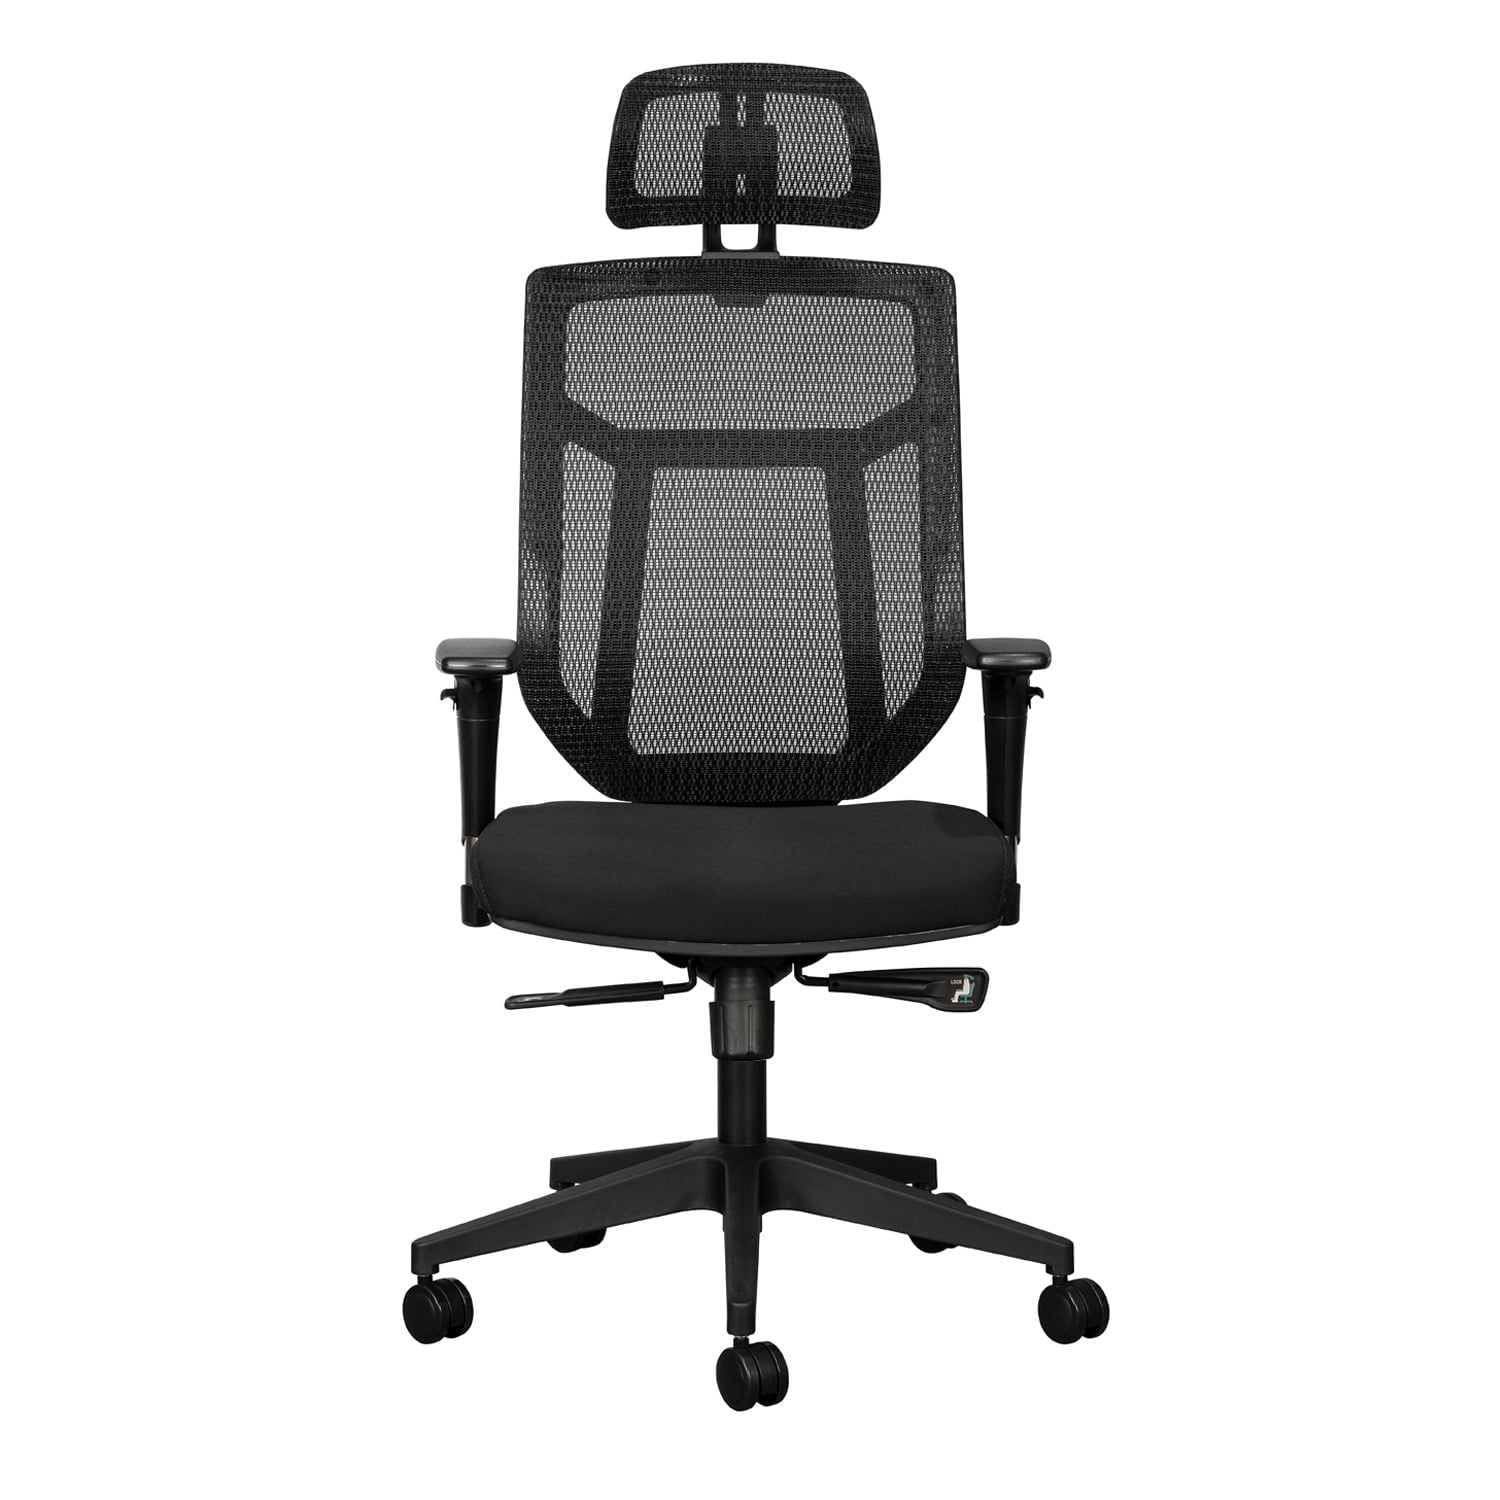 ergosit ergonomic office chair with headrest